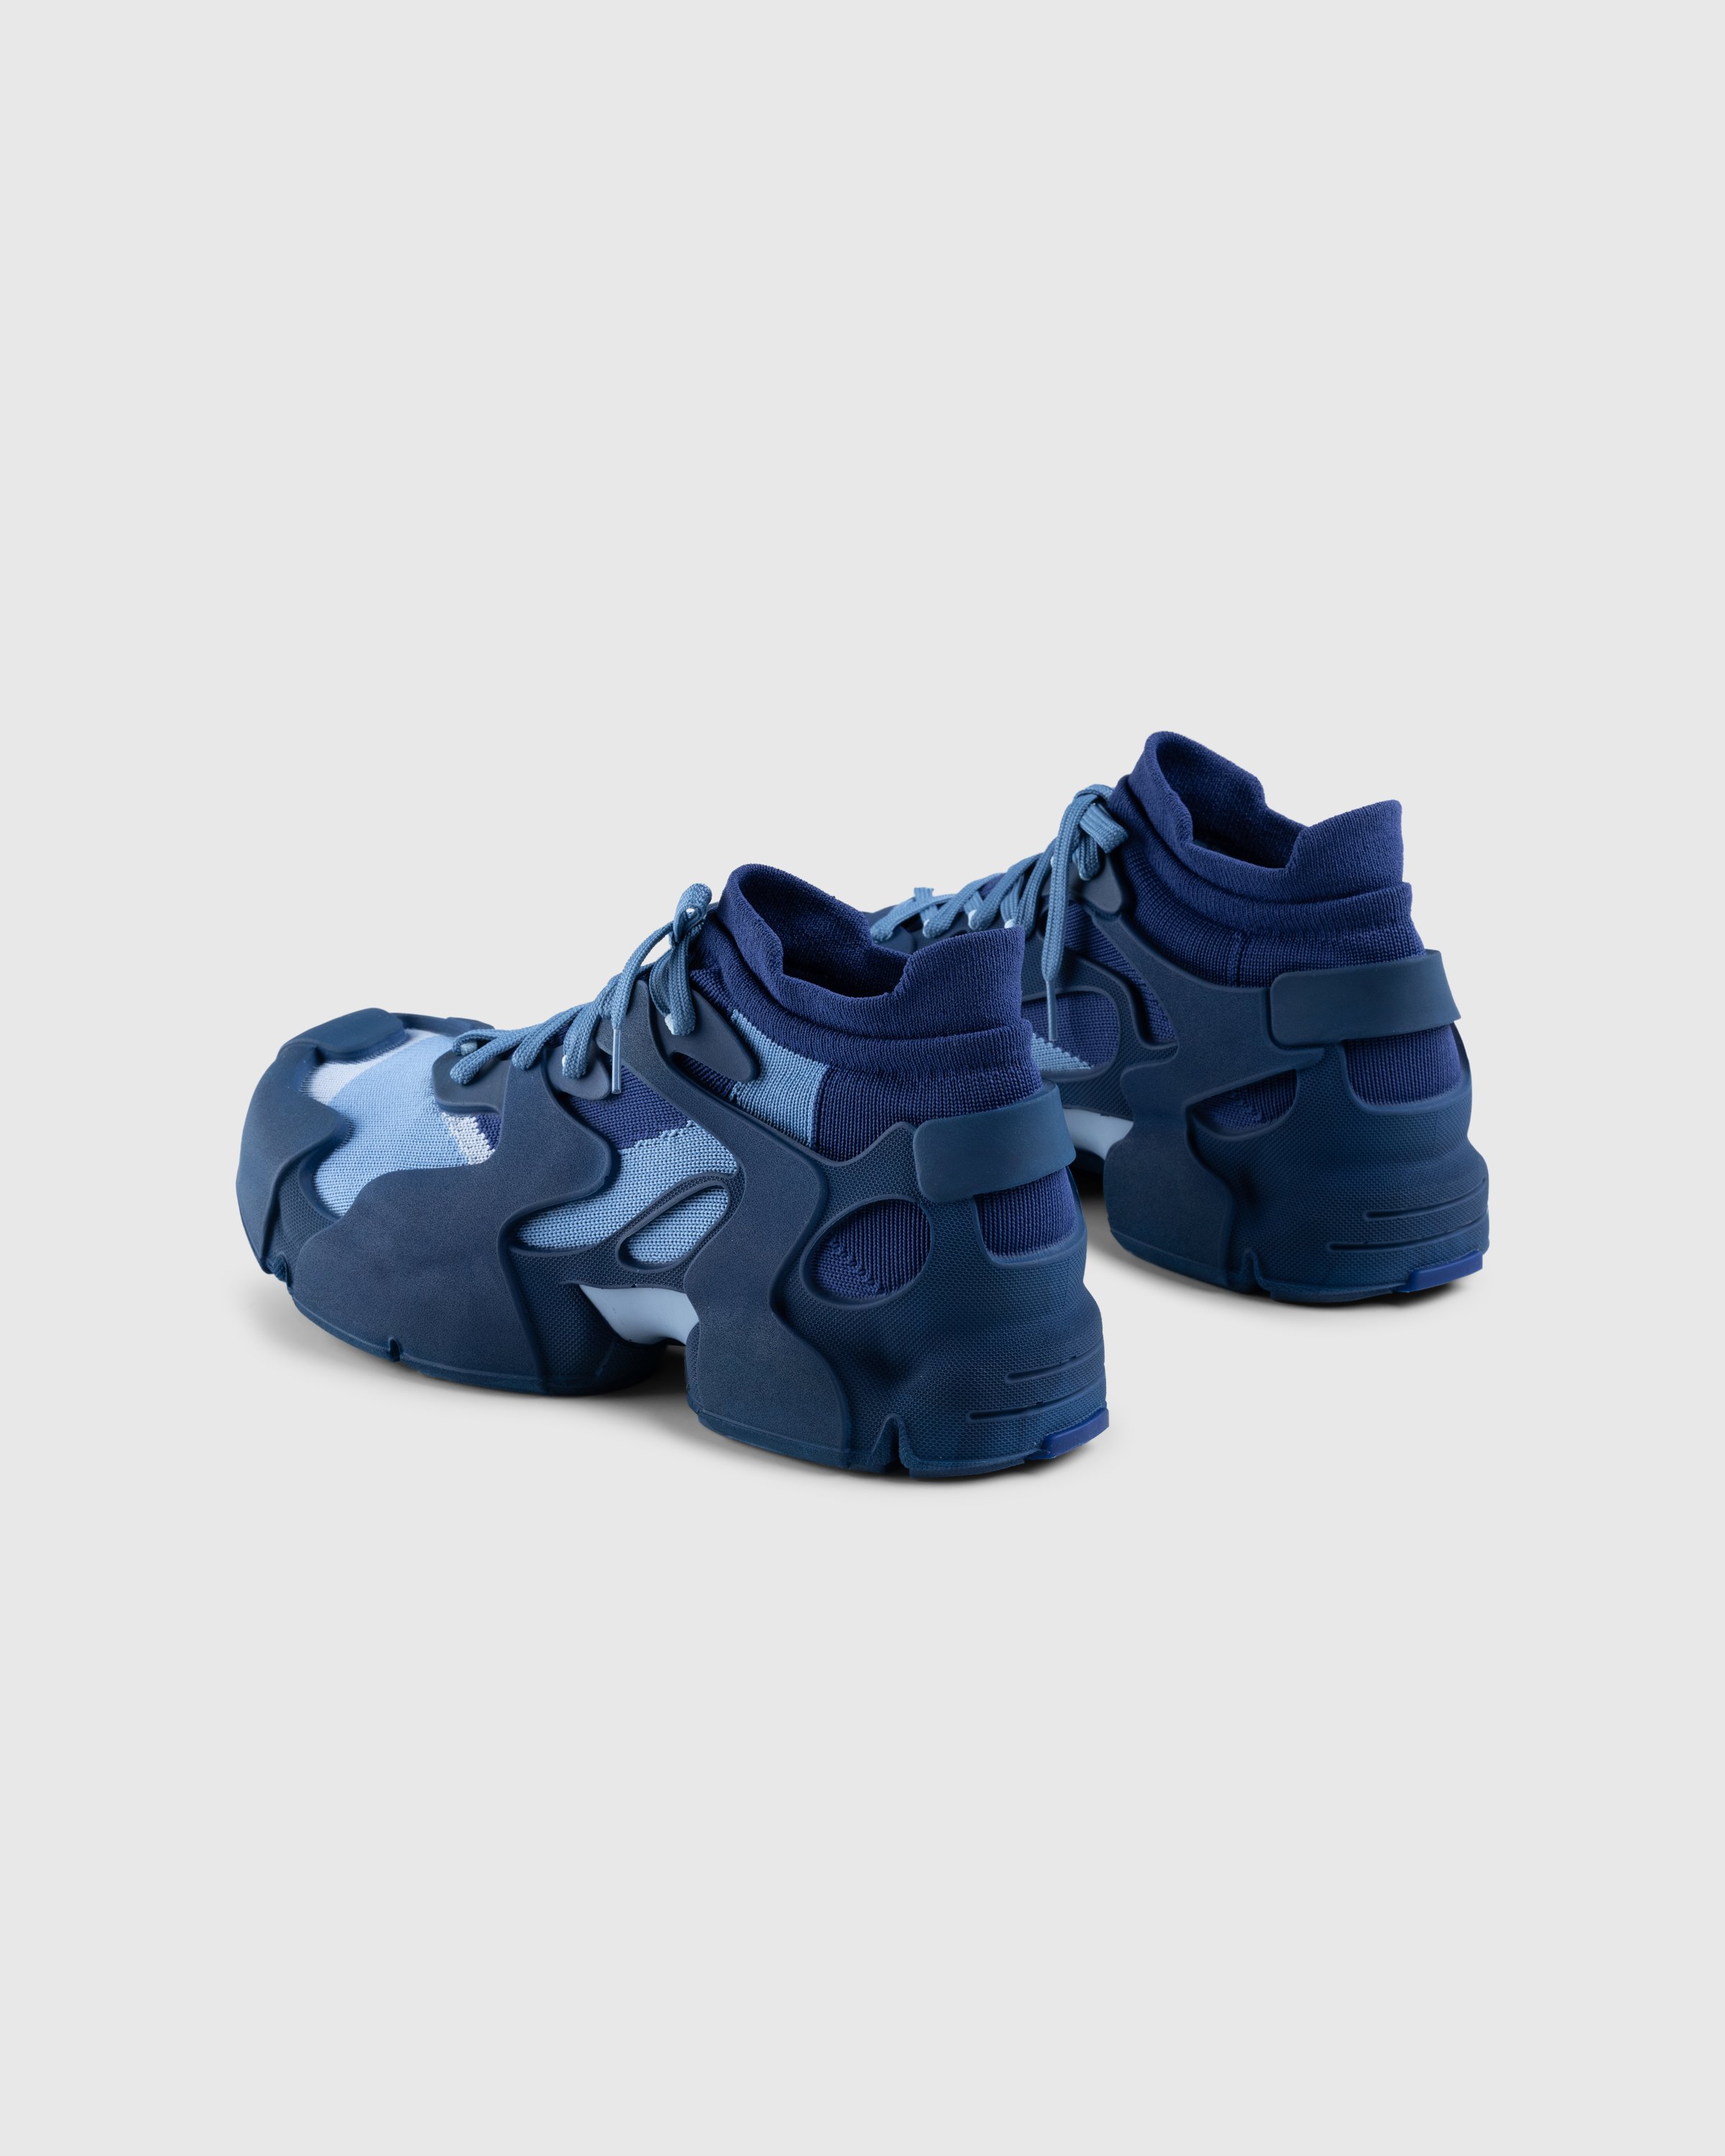 CAMPERLAB - Tossu Blue - Footwear - Multi - Image 4